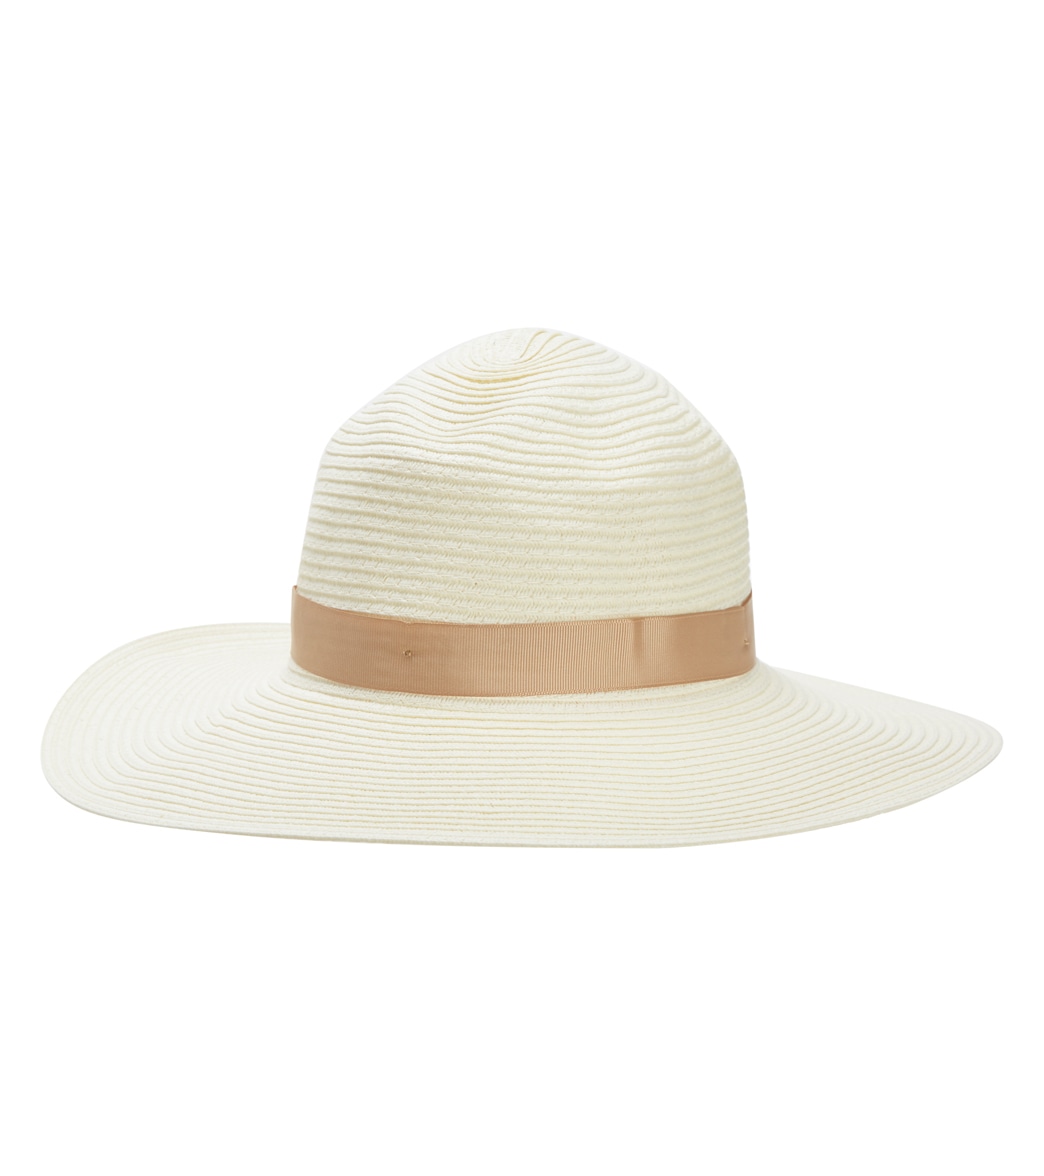 Physician Endorsed Women's Andi Wide Brim Straw Hat - Cream/Tan One Size - Swimoutlet.com